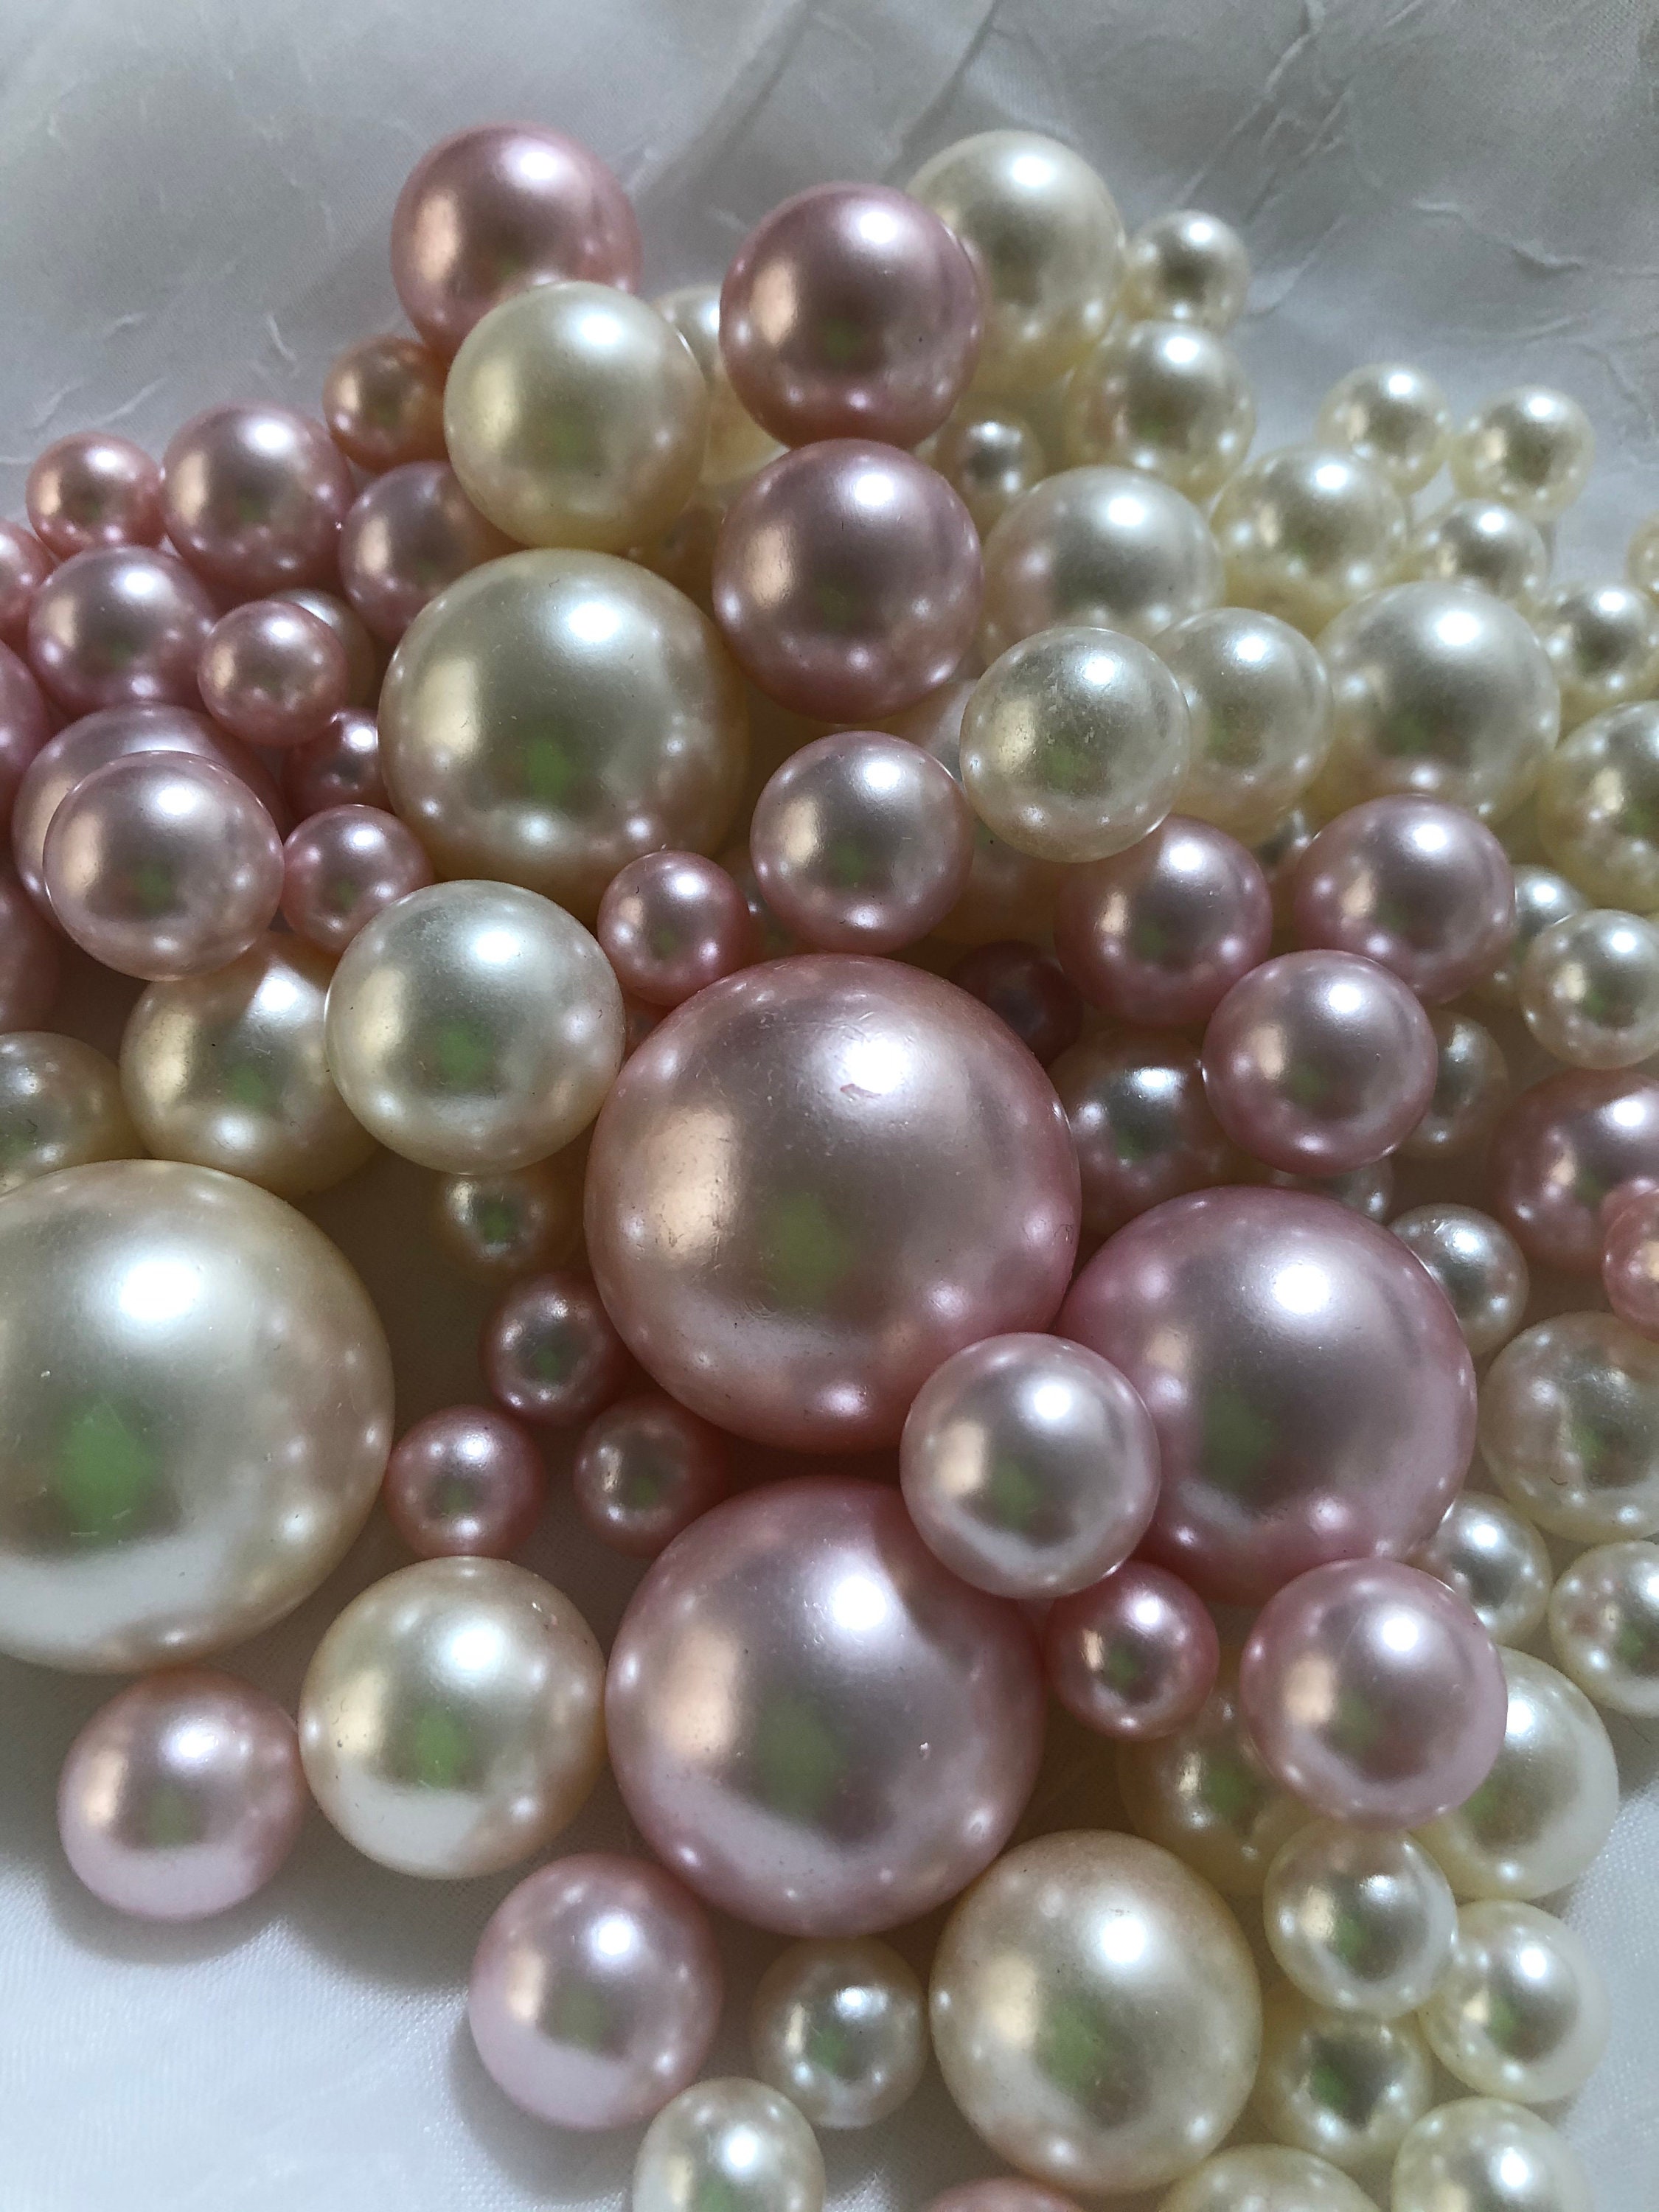 Wholesale BENECREAT 149 PCS Christmas Vase Filler Pearls